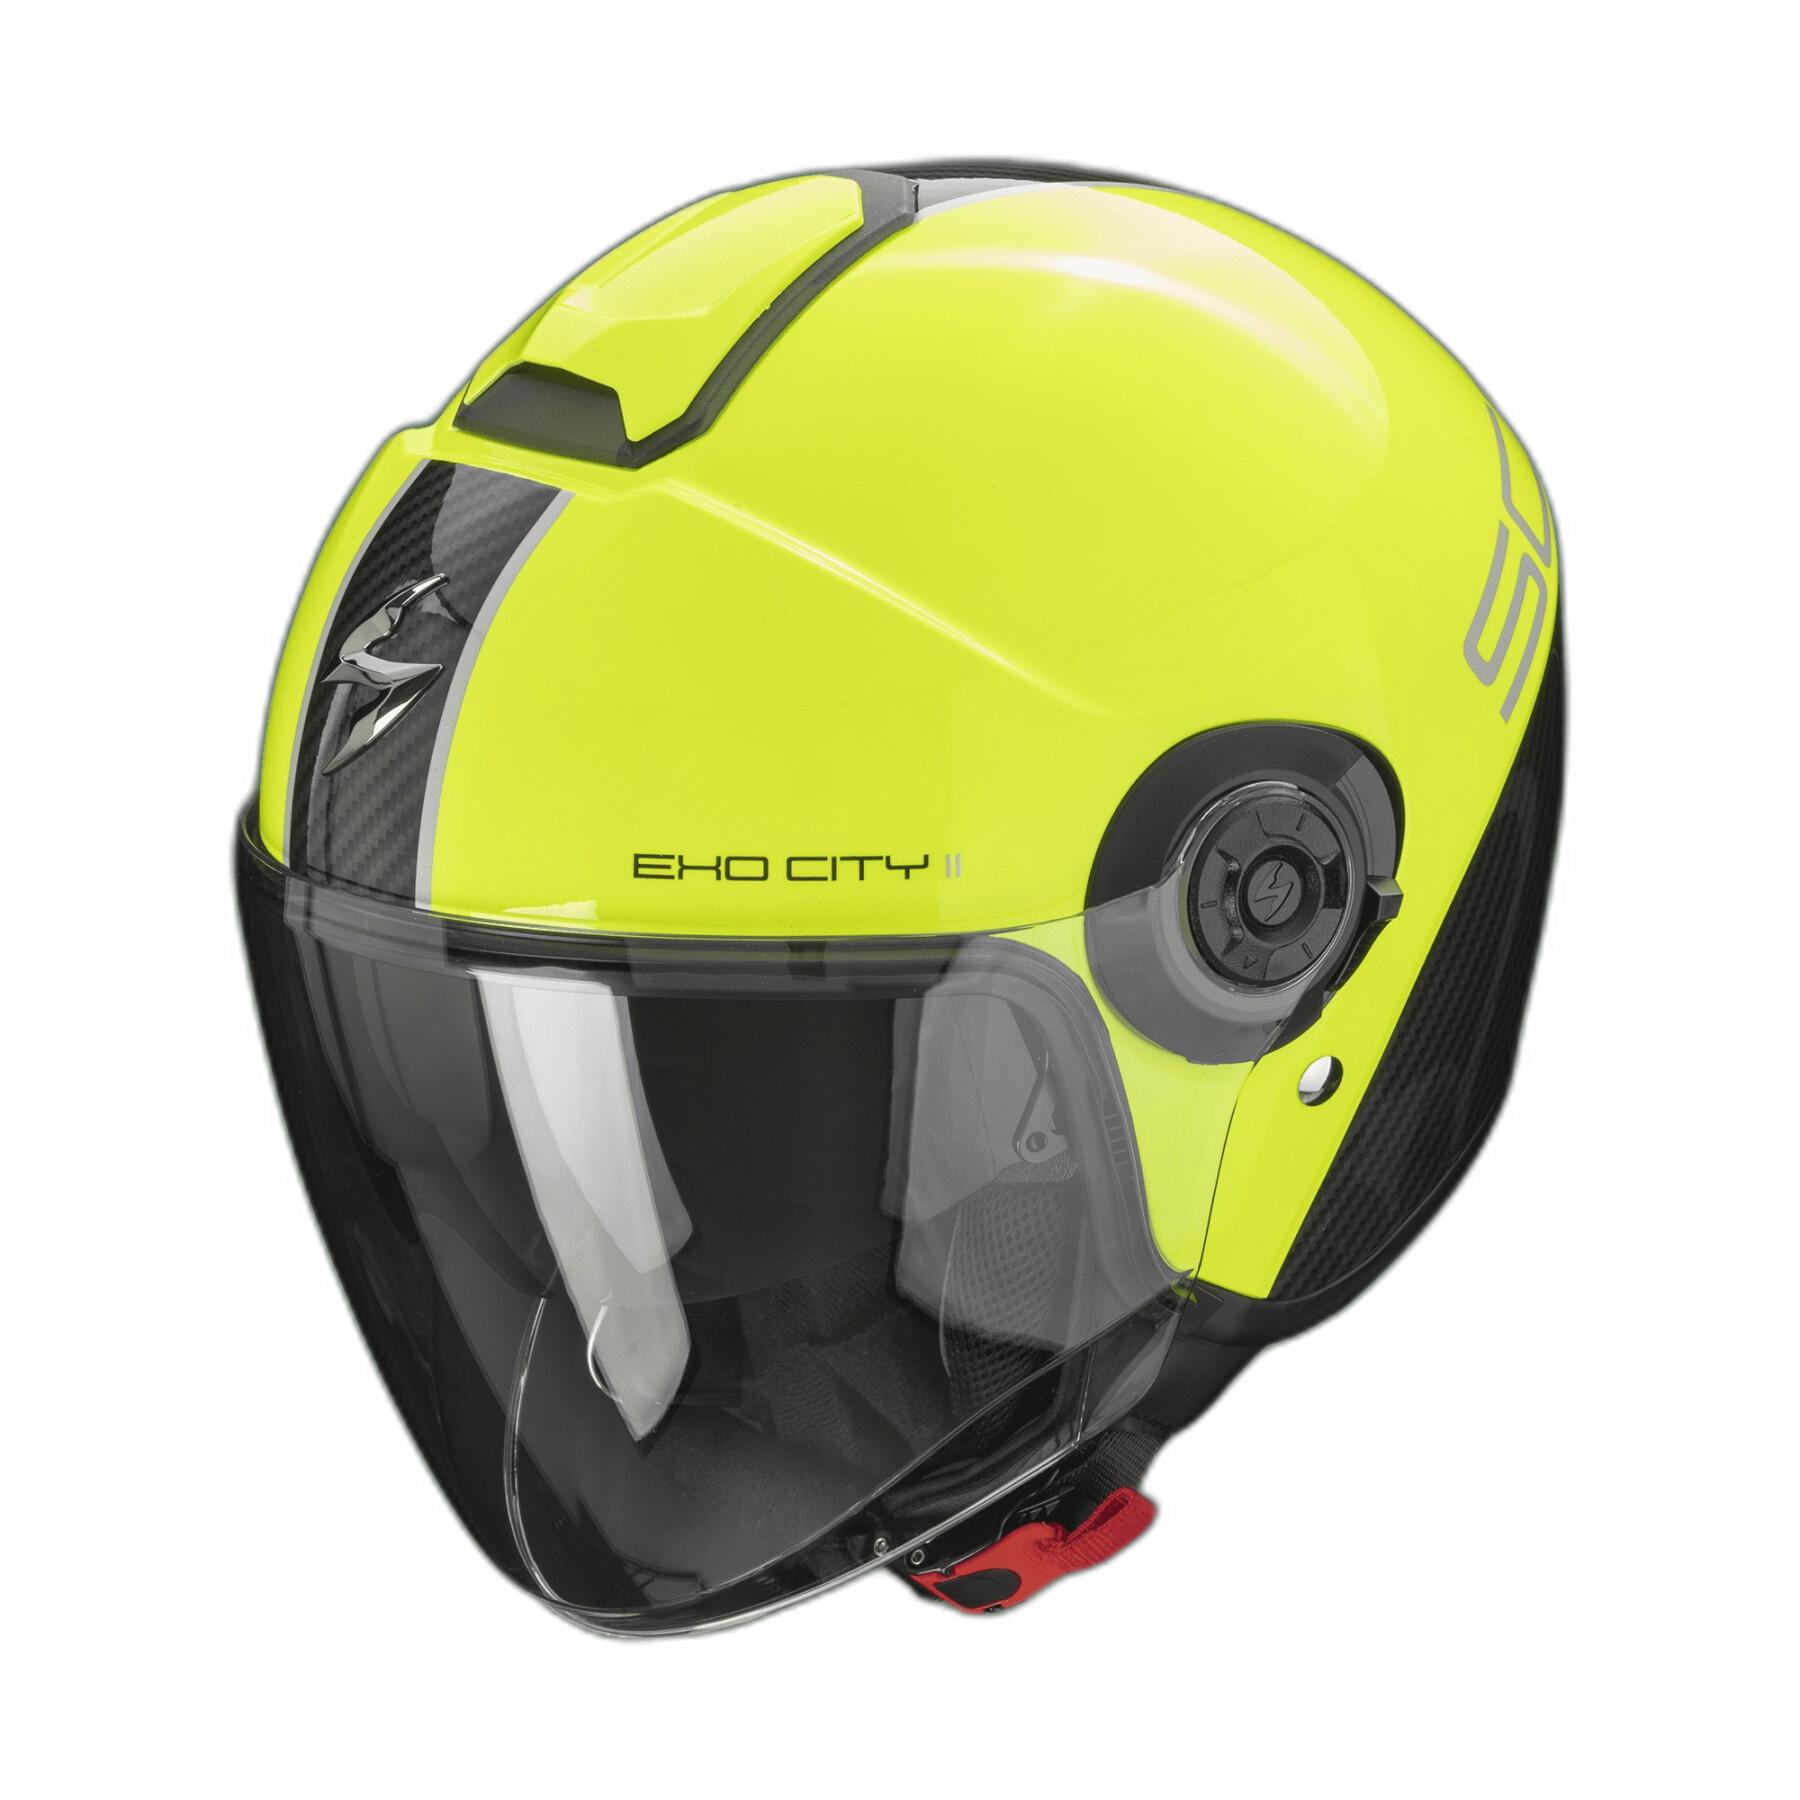 Motorcycle helmet jet Scorpion Exo-city II Carbo ECE 22-06